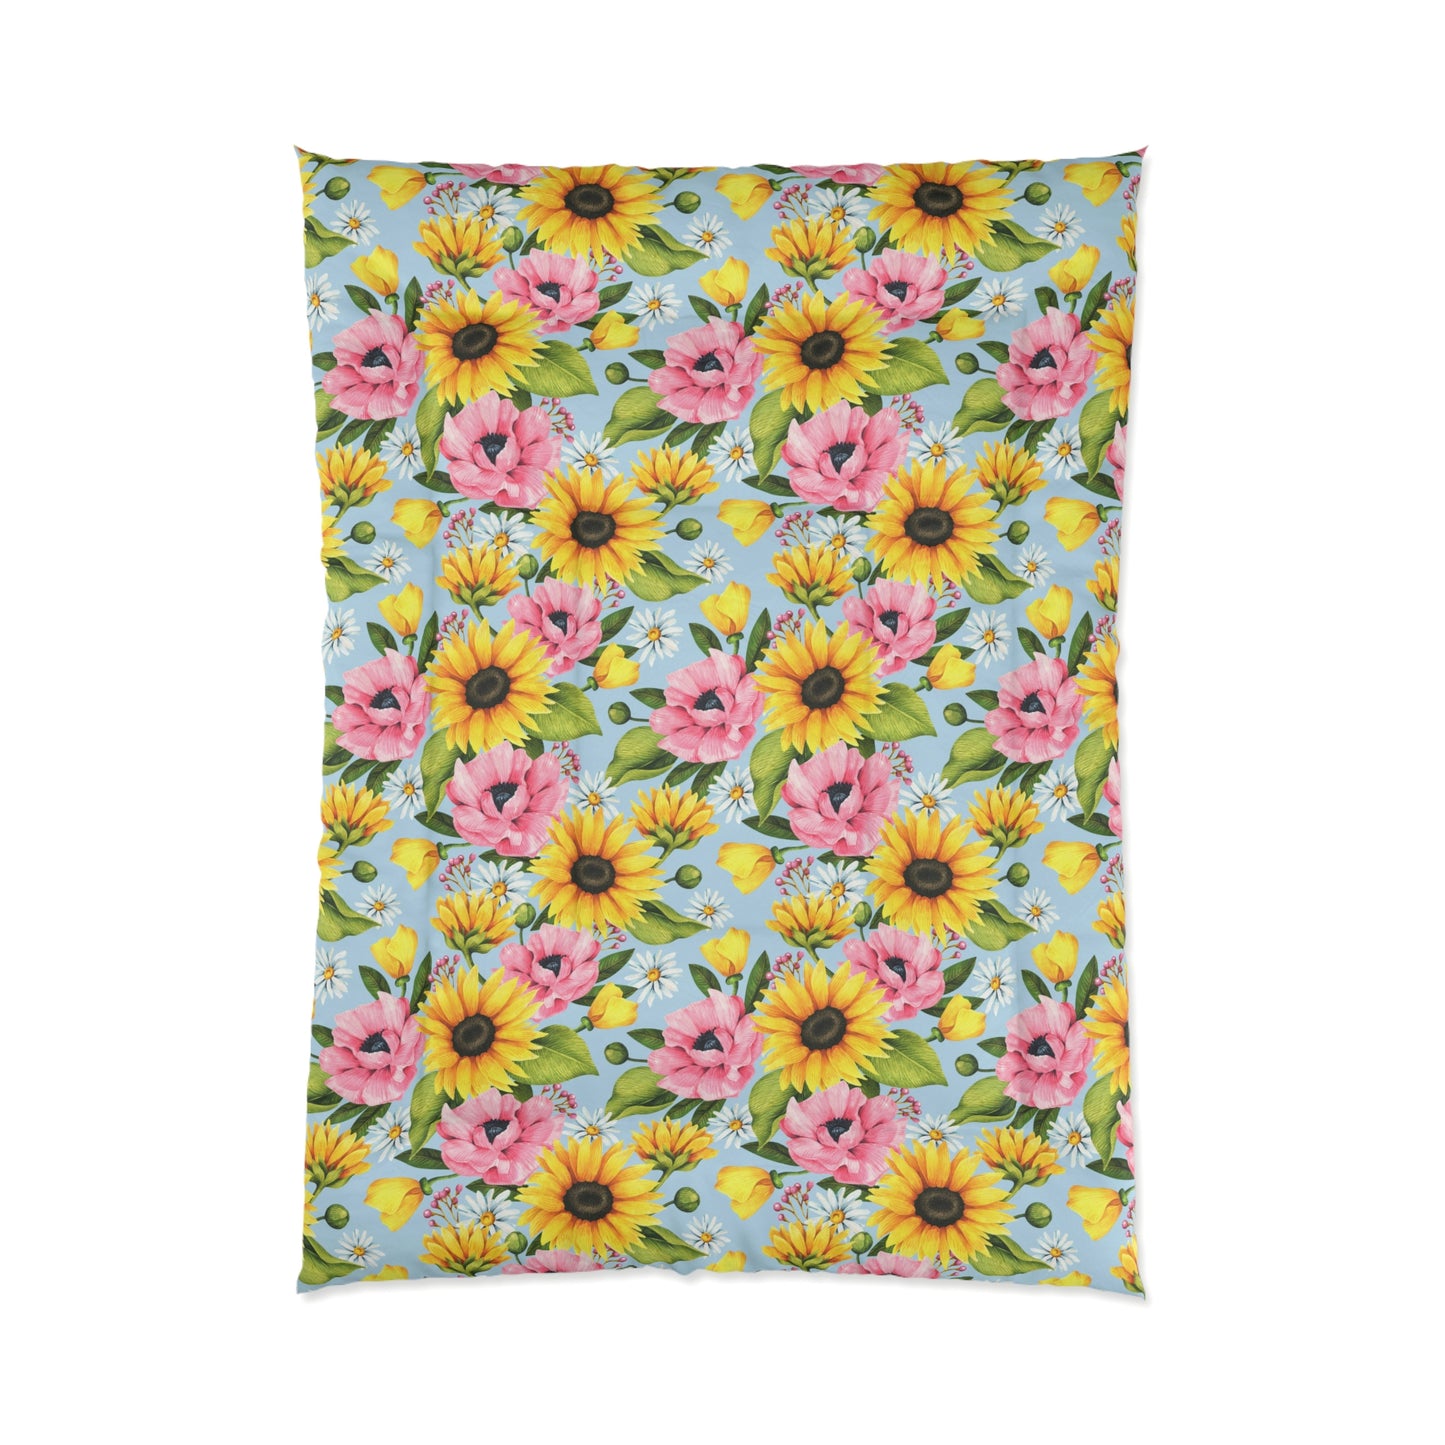 Sunflowers Comforter